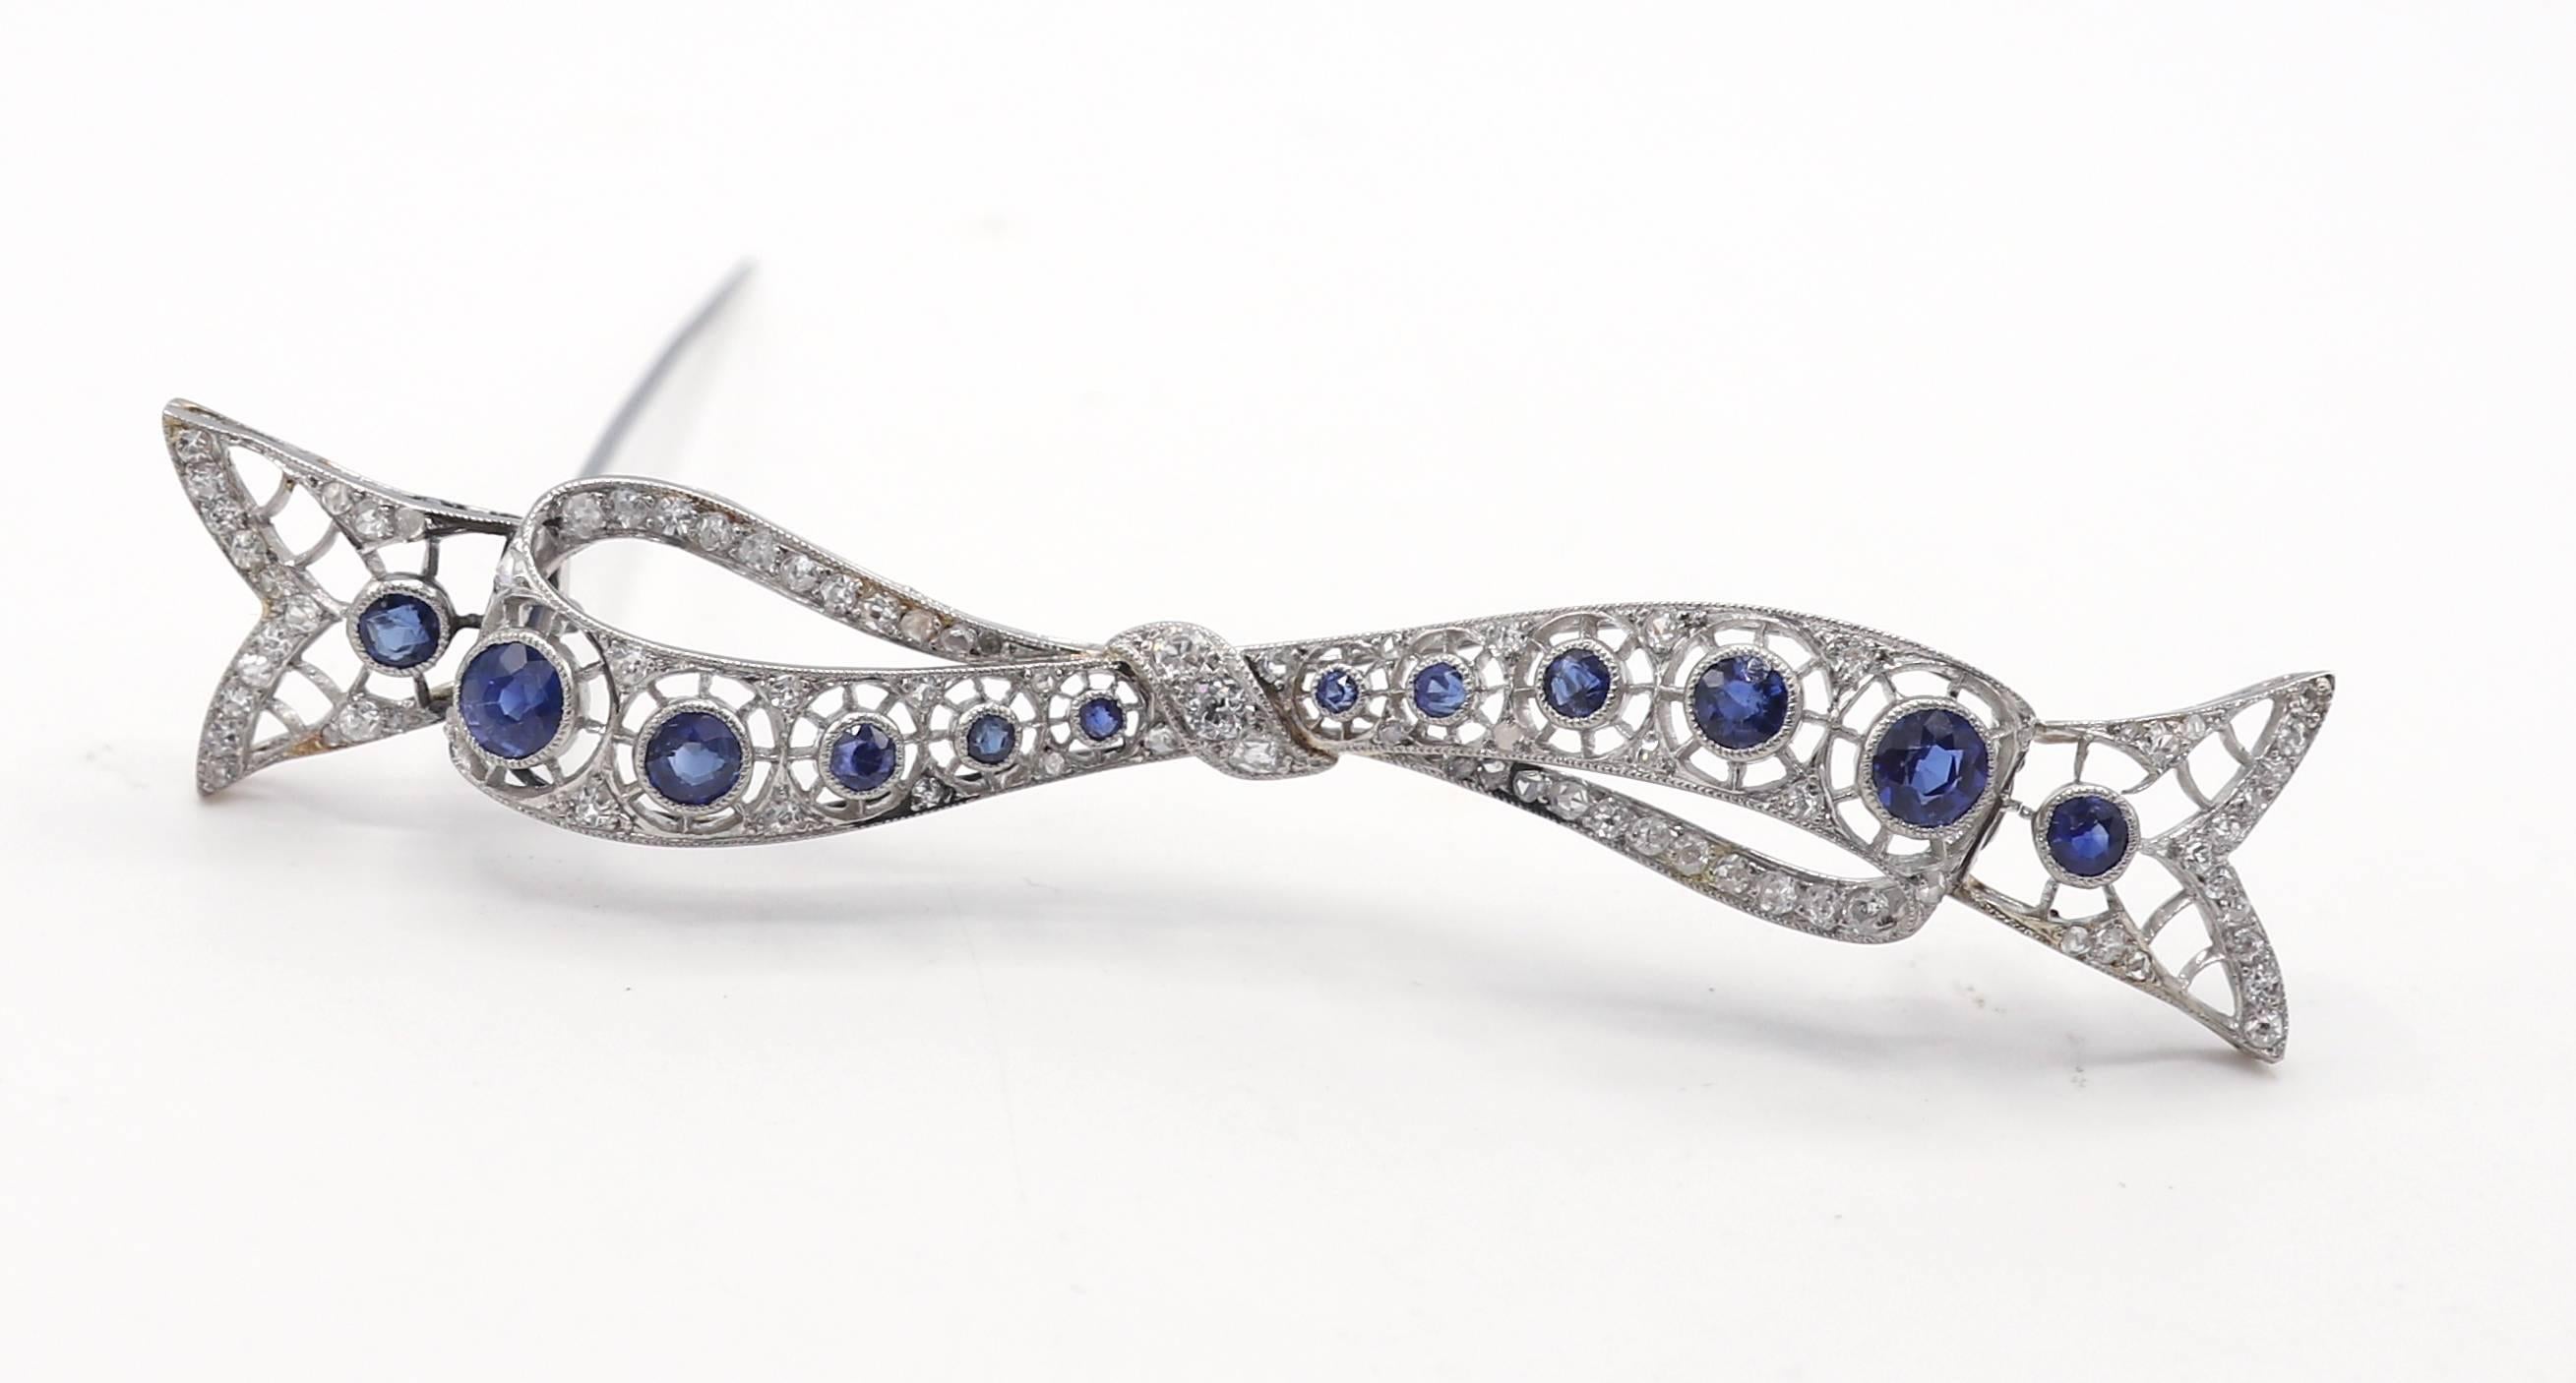 Art Deco Platinum Natural Diamond & Sapphire Bow Brooch Pin
Metal: Platinum
Weight: 12.47 grams
Diamonds: Approx. 1 CTW G-H European and mine cut natural diamonds
Length: 3 inches
Width: 0.5 inch

